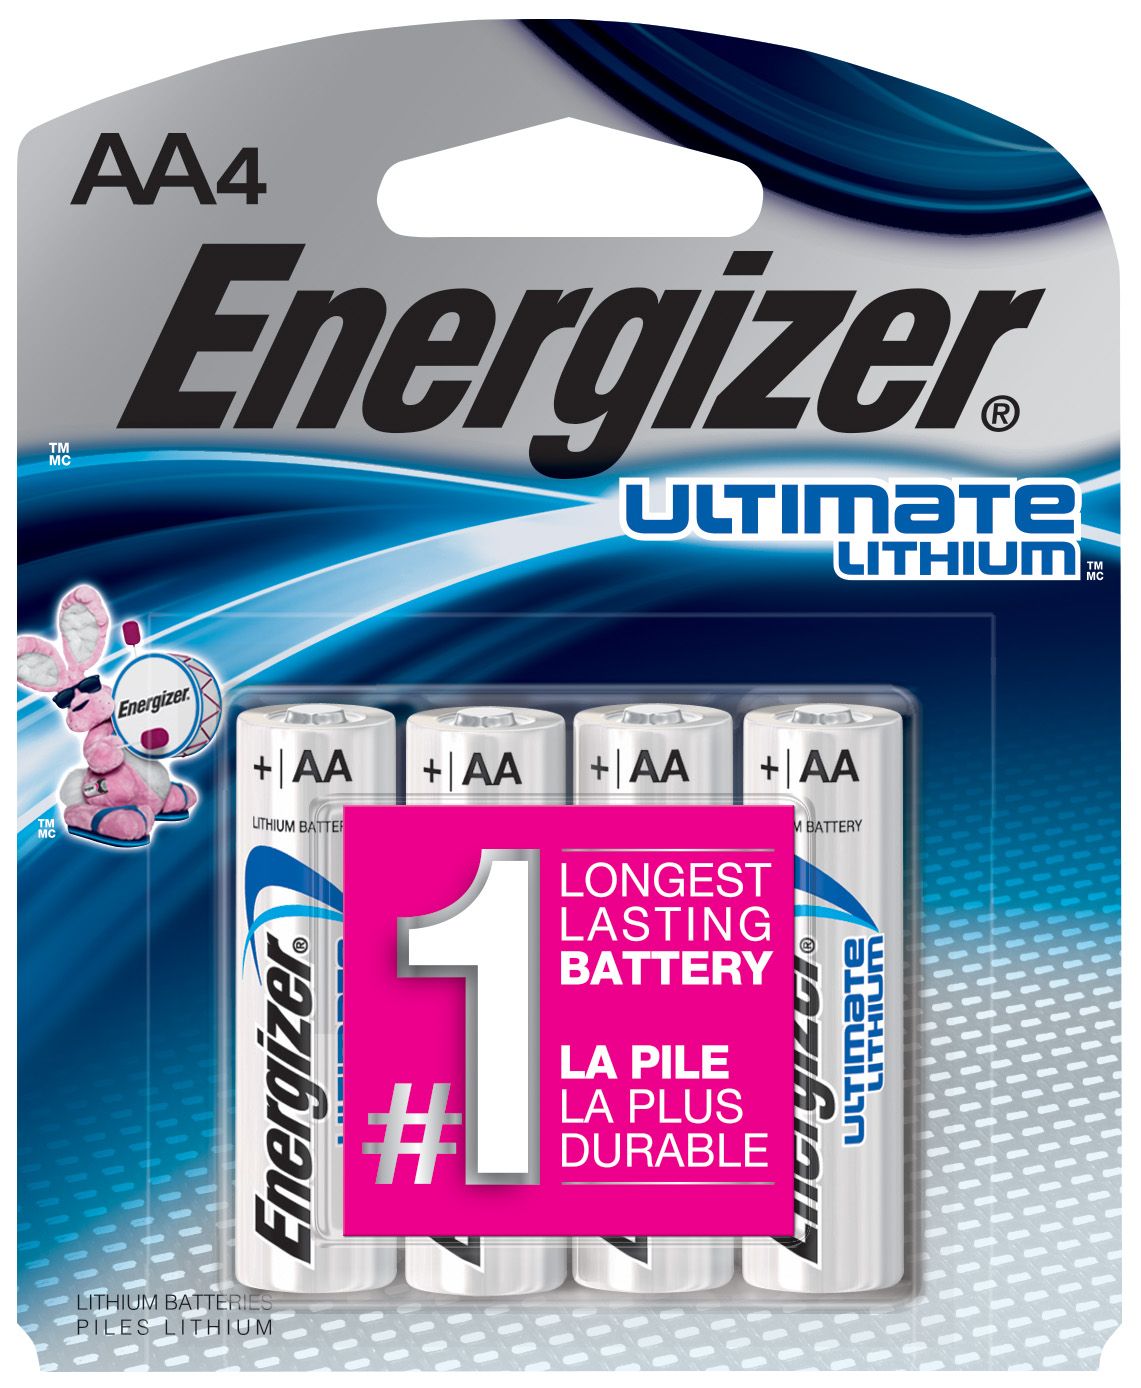 Energizer Ultimate Lithium Batteries | Sponsor | Energizer, Energizer